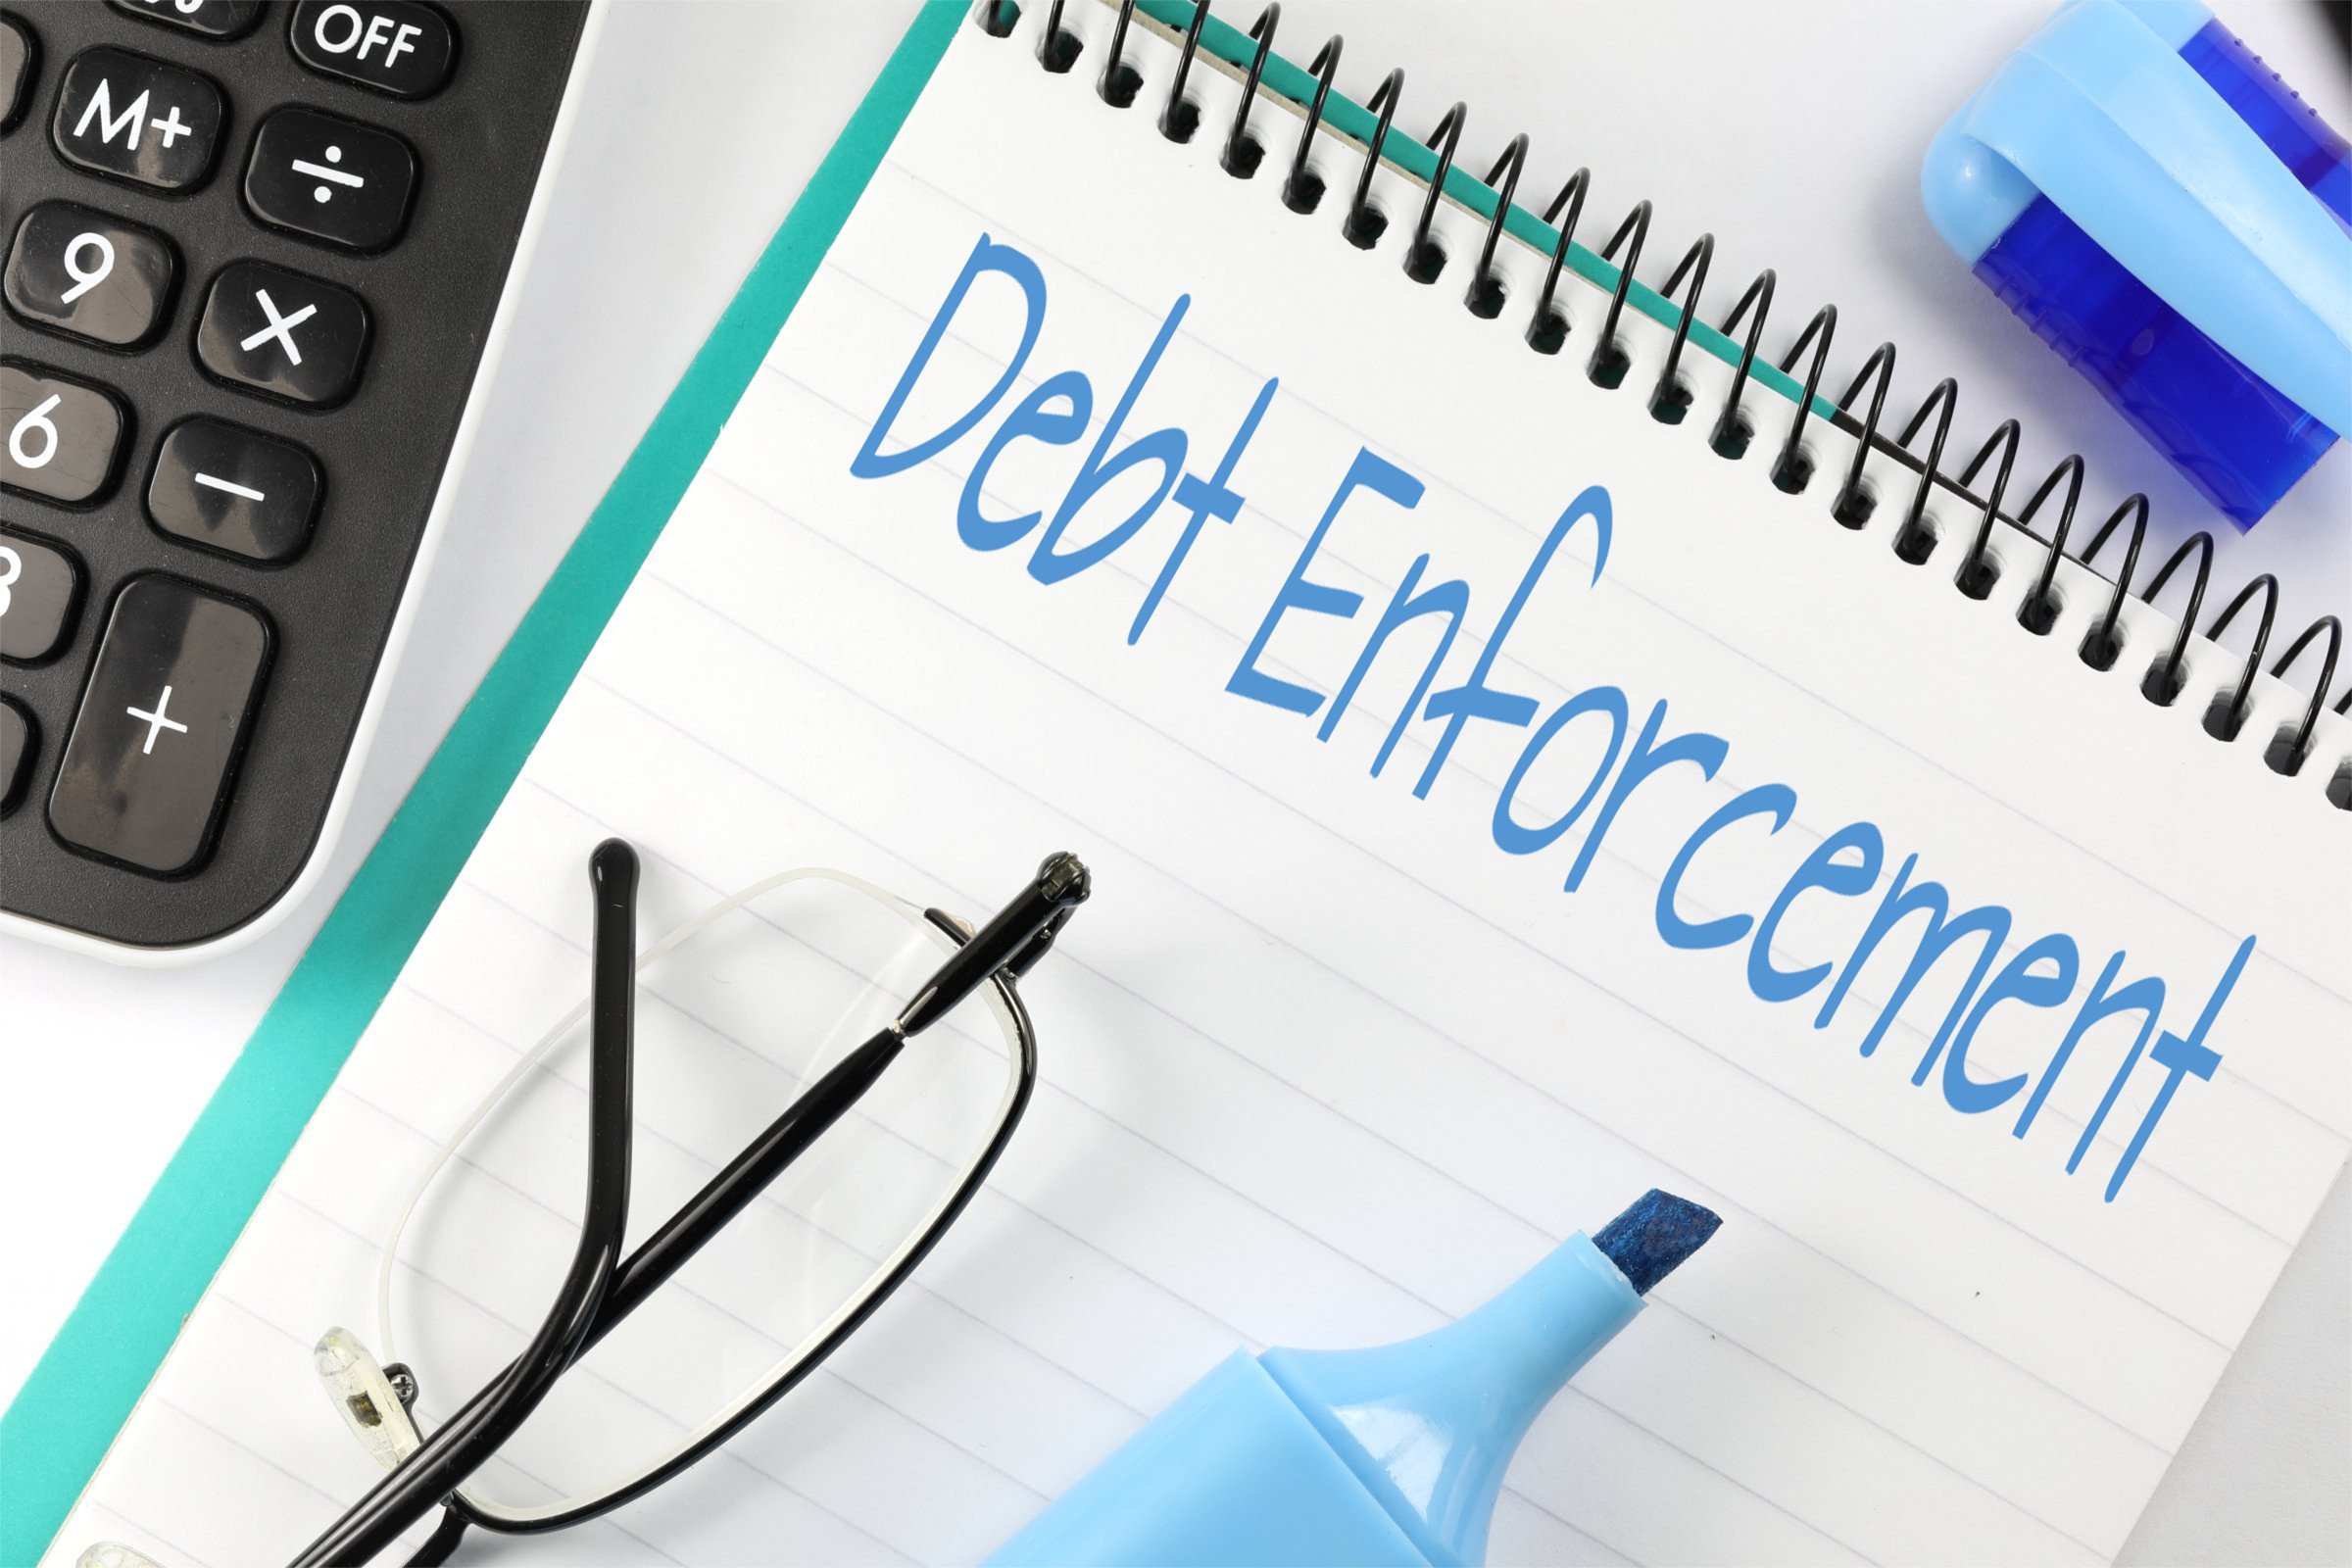 debt enforcement